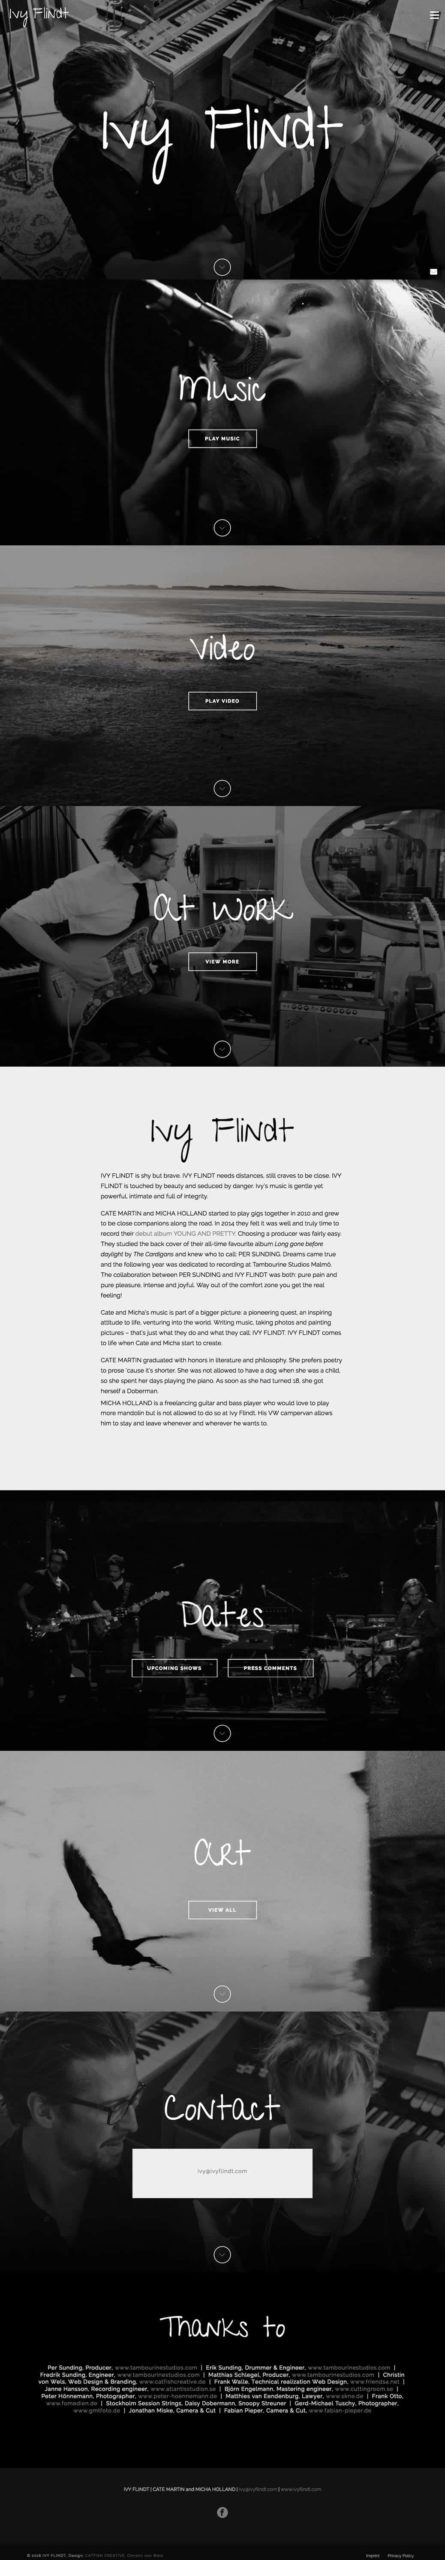 catfish creative: Web Design and Branding for IVY FLINDT